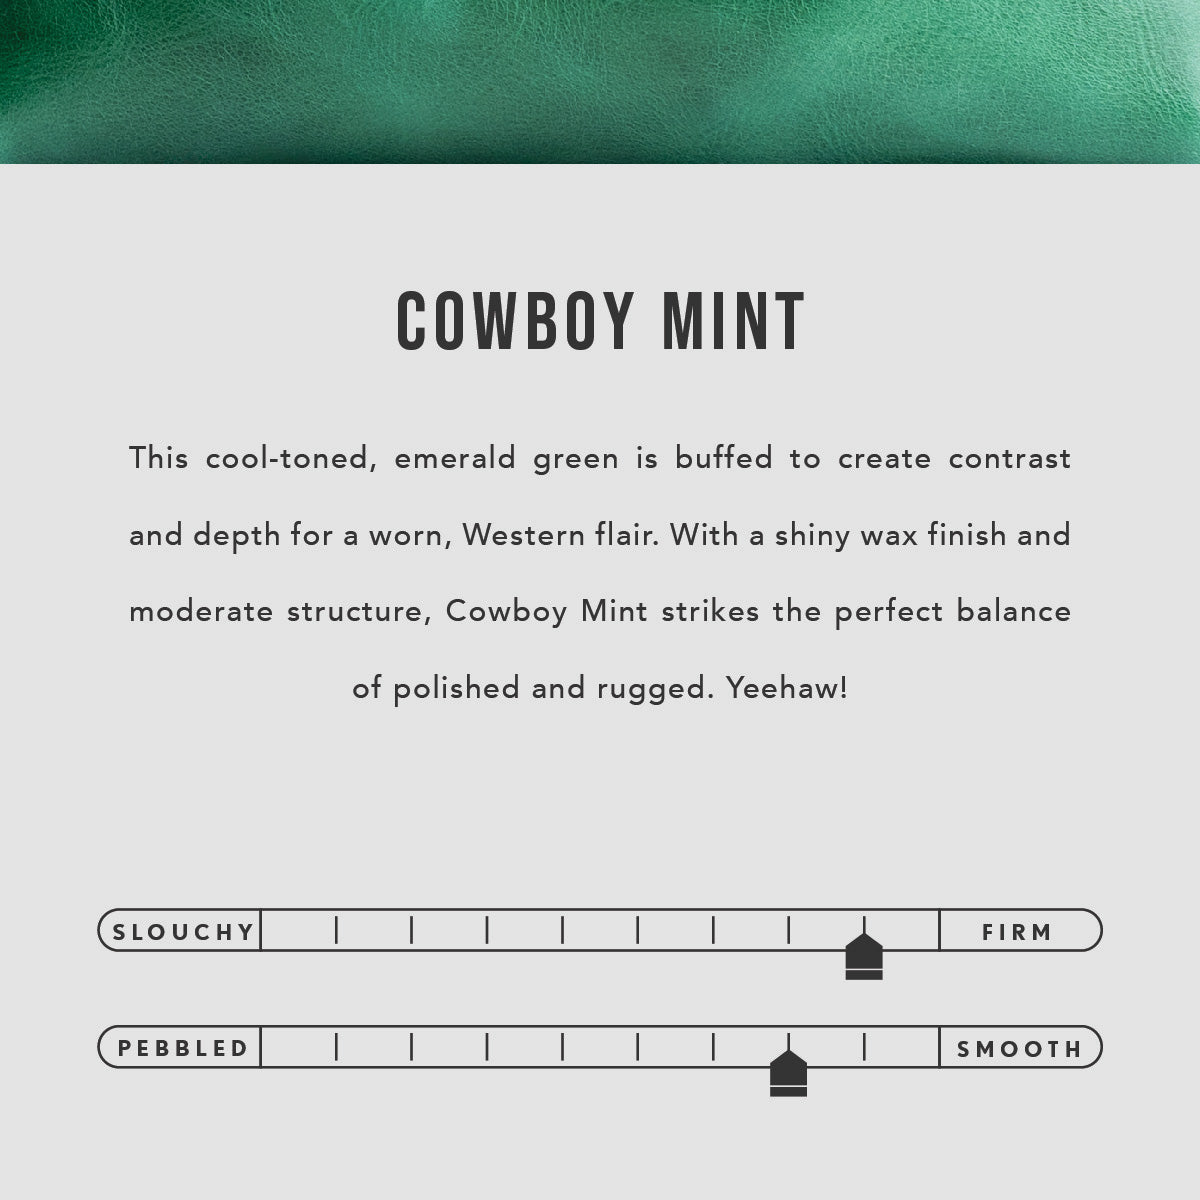 Cowboy Mint | infographic